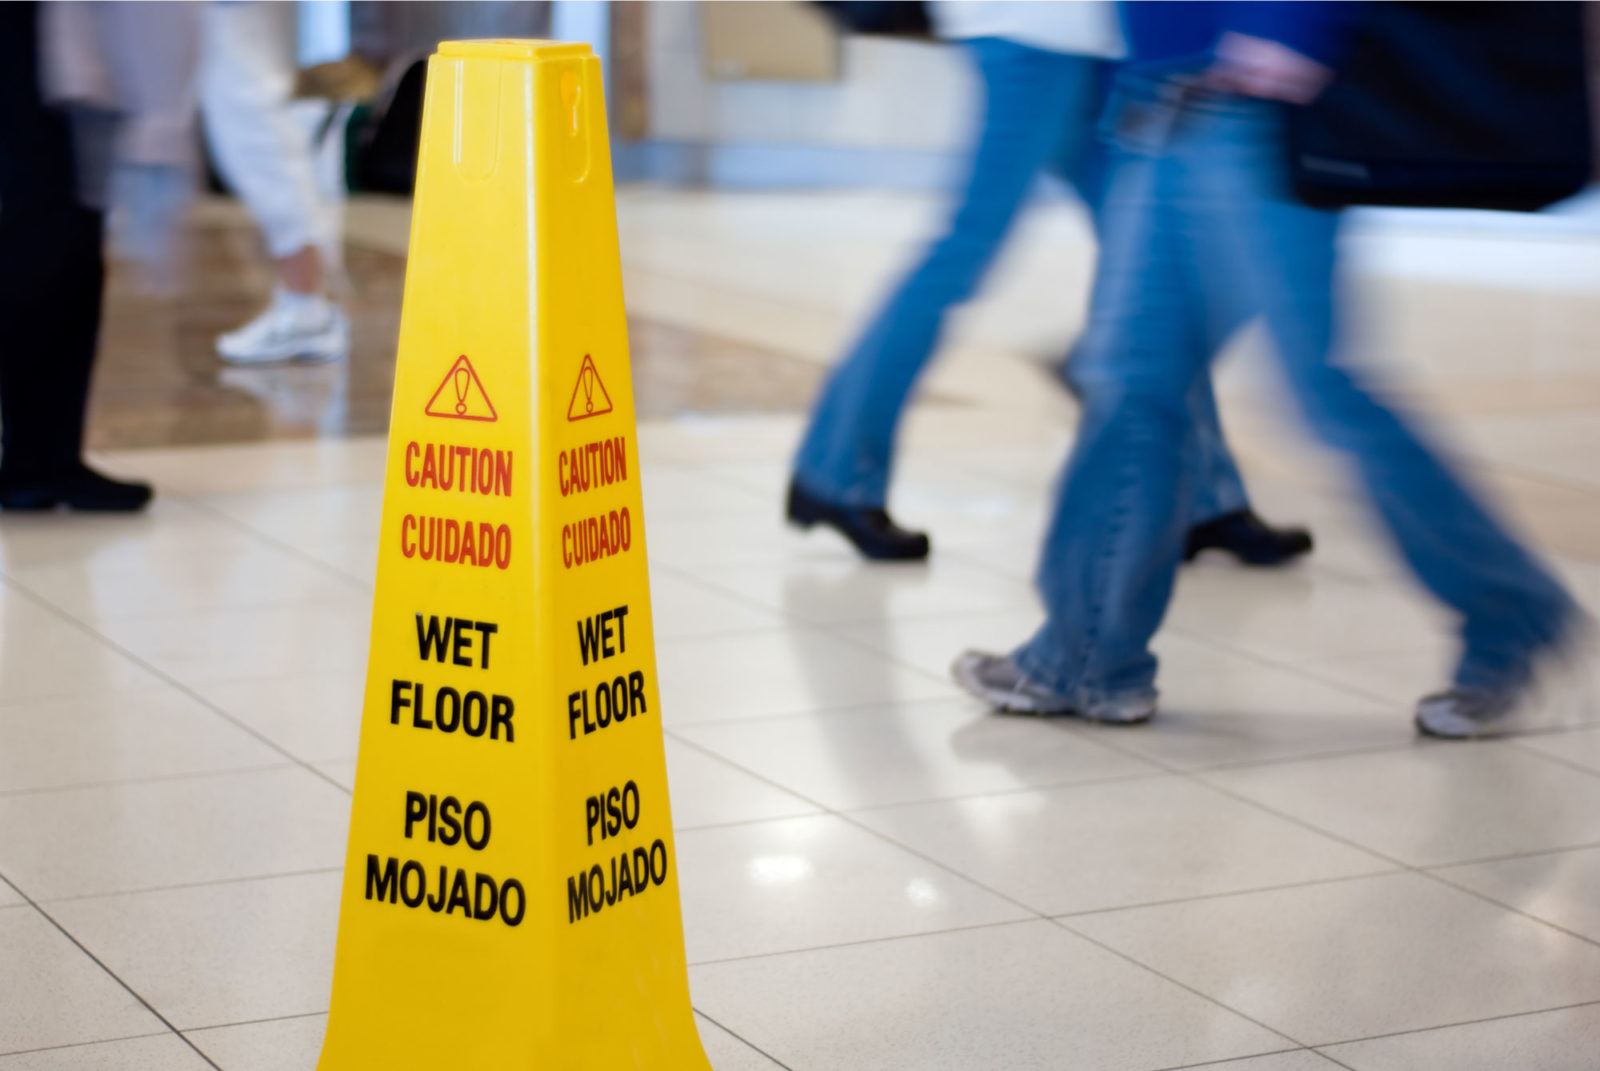 Slip and Fall Personal Injury Law in Marietta - Image of a caution sign / Lesiones Personales incluyen Accidentes por Resbalones y Caídas.